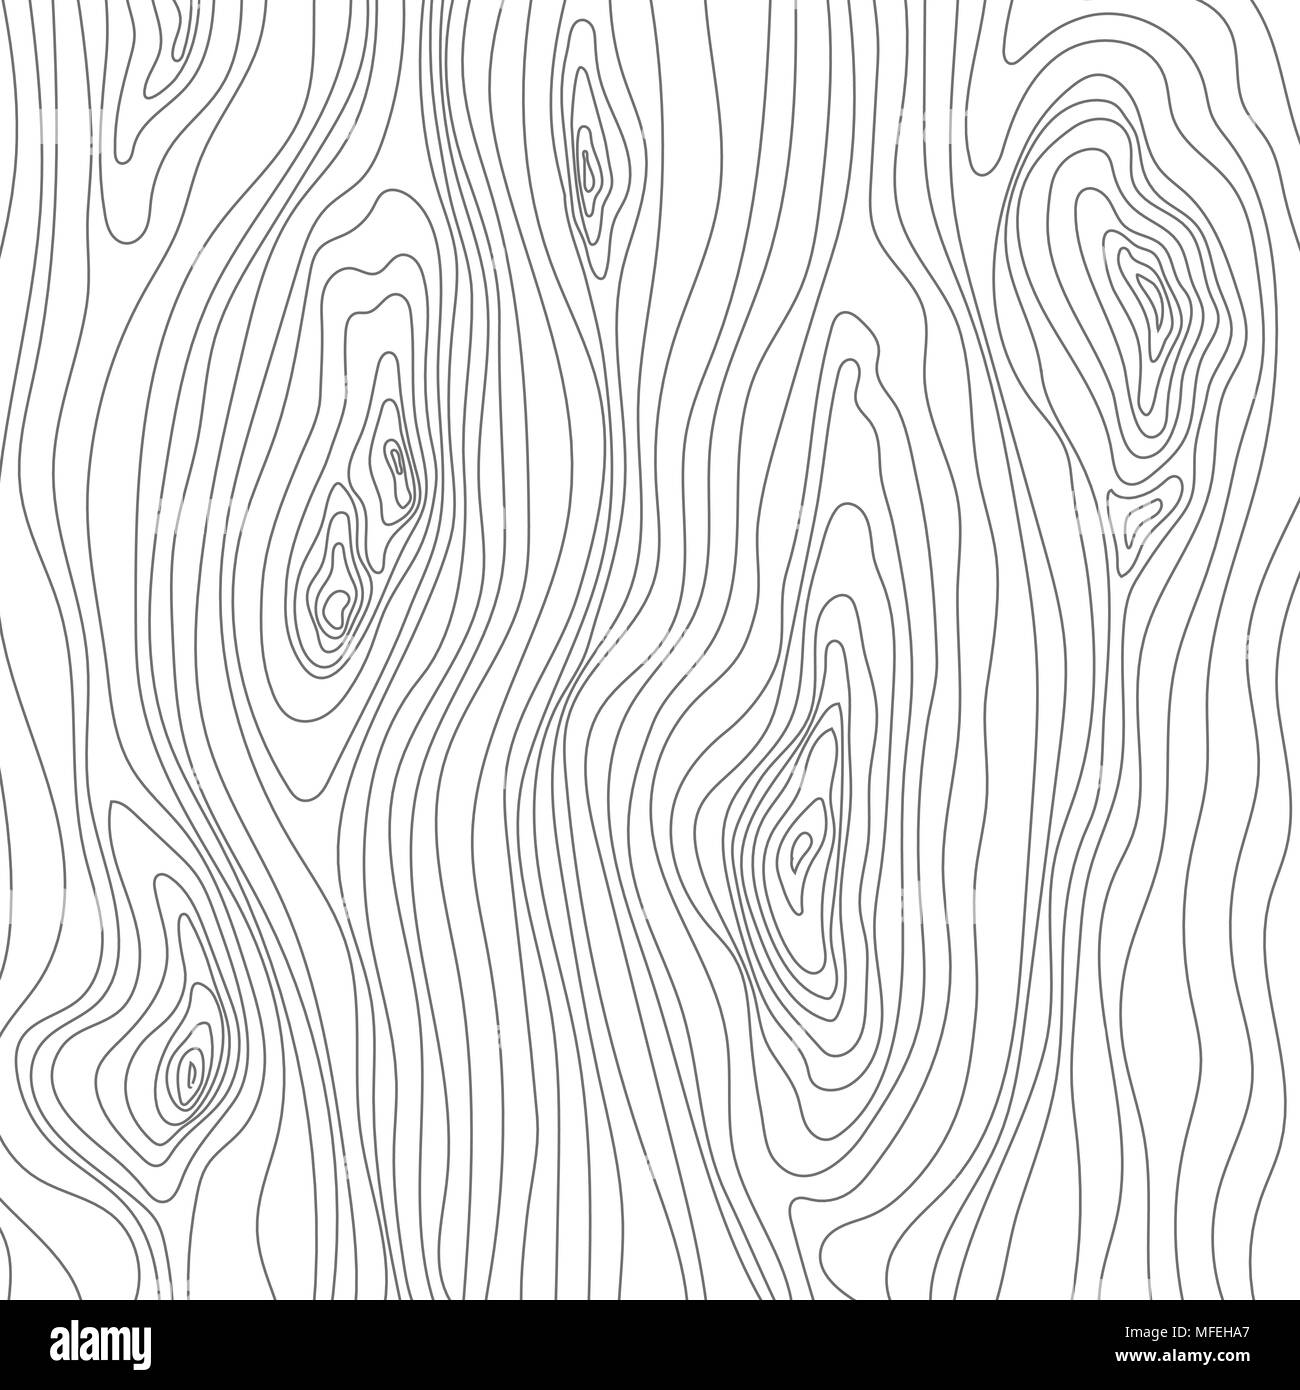 Wood Texture Sketch. Grain cover surface. Wooden fibers. Vector background Stock Vector